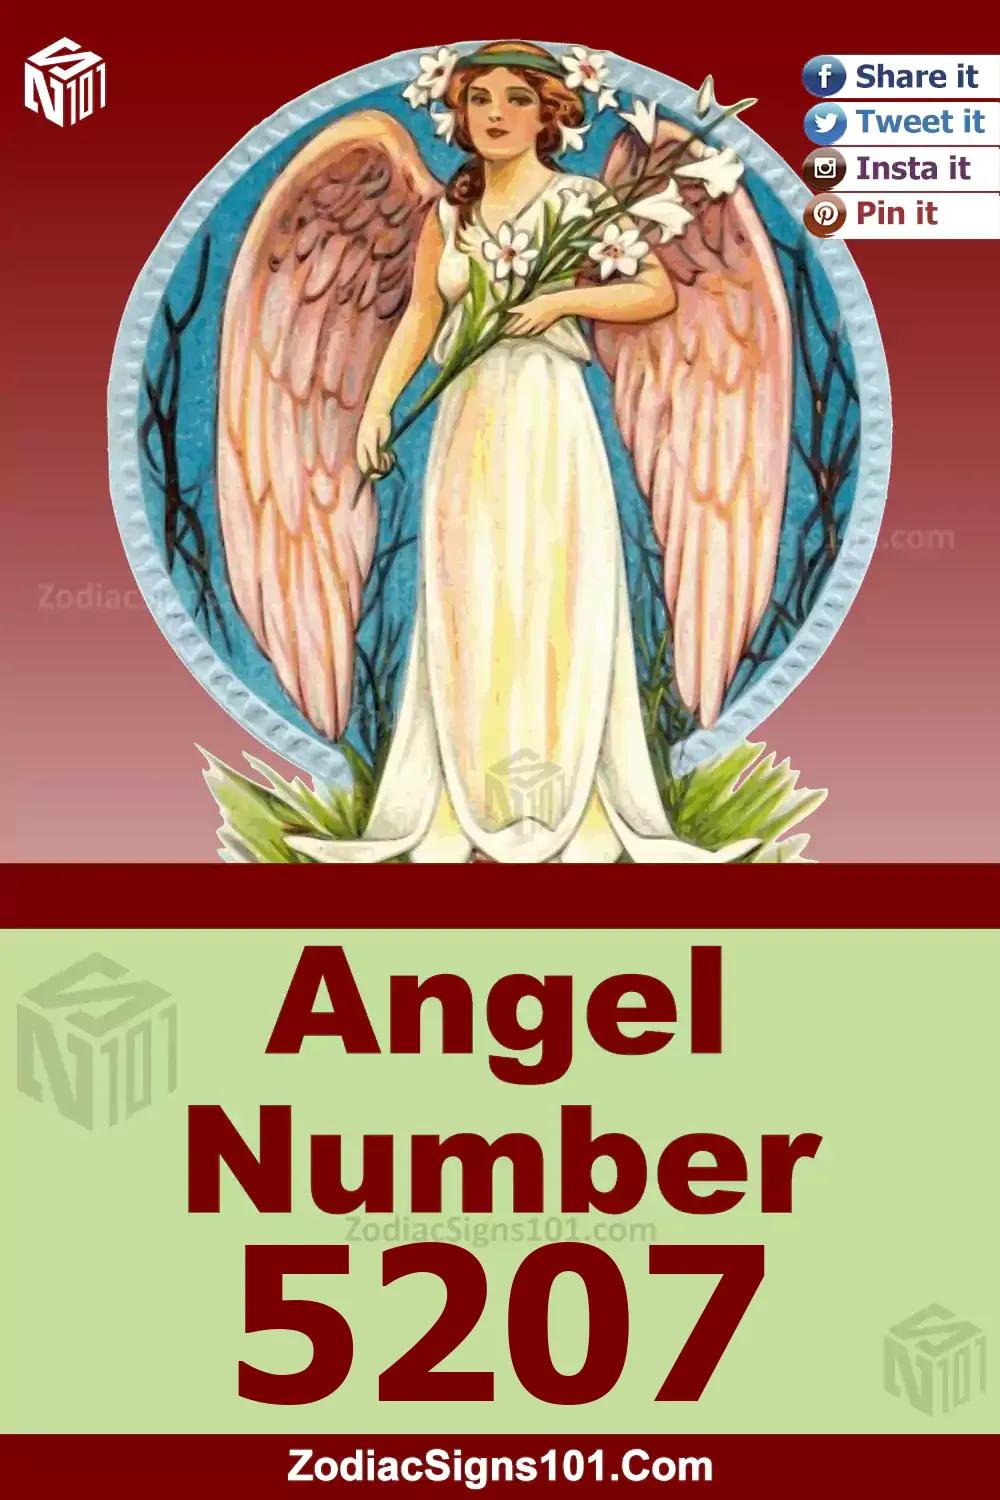 5207-Angel-Number-Meaning.jpg